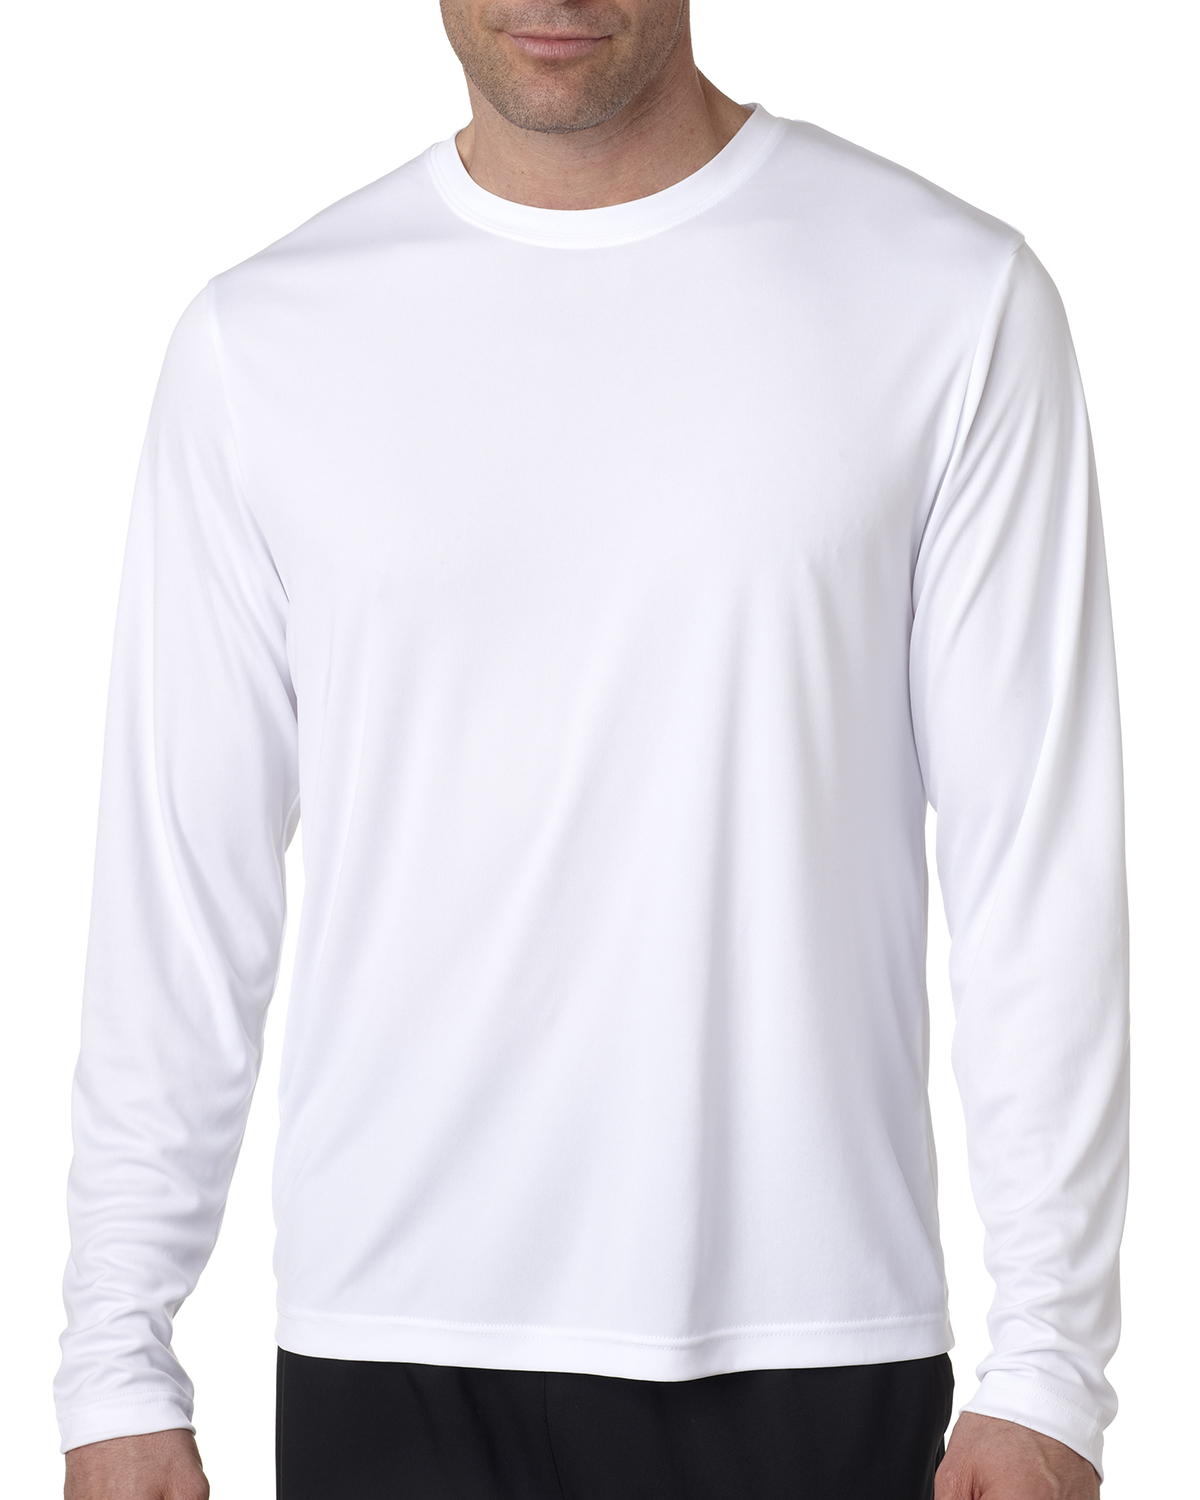 482L Hanes Adult Cool DRI® with FreshIQ Long-Sleeve Performance T-Shirt